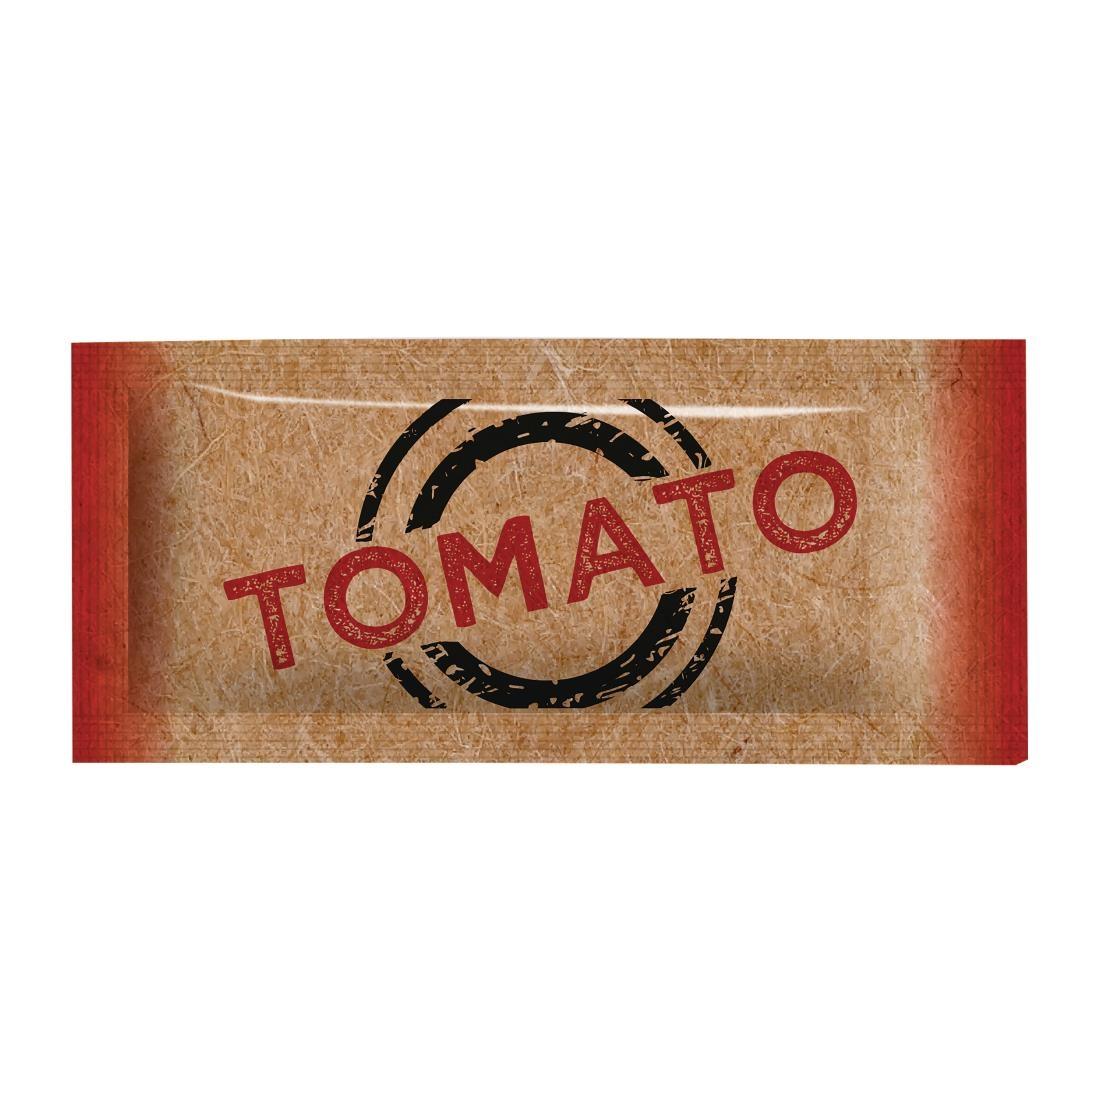 Tomato Sauce Sachets (Pack of 200) - FW991  - 1